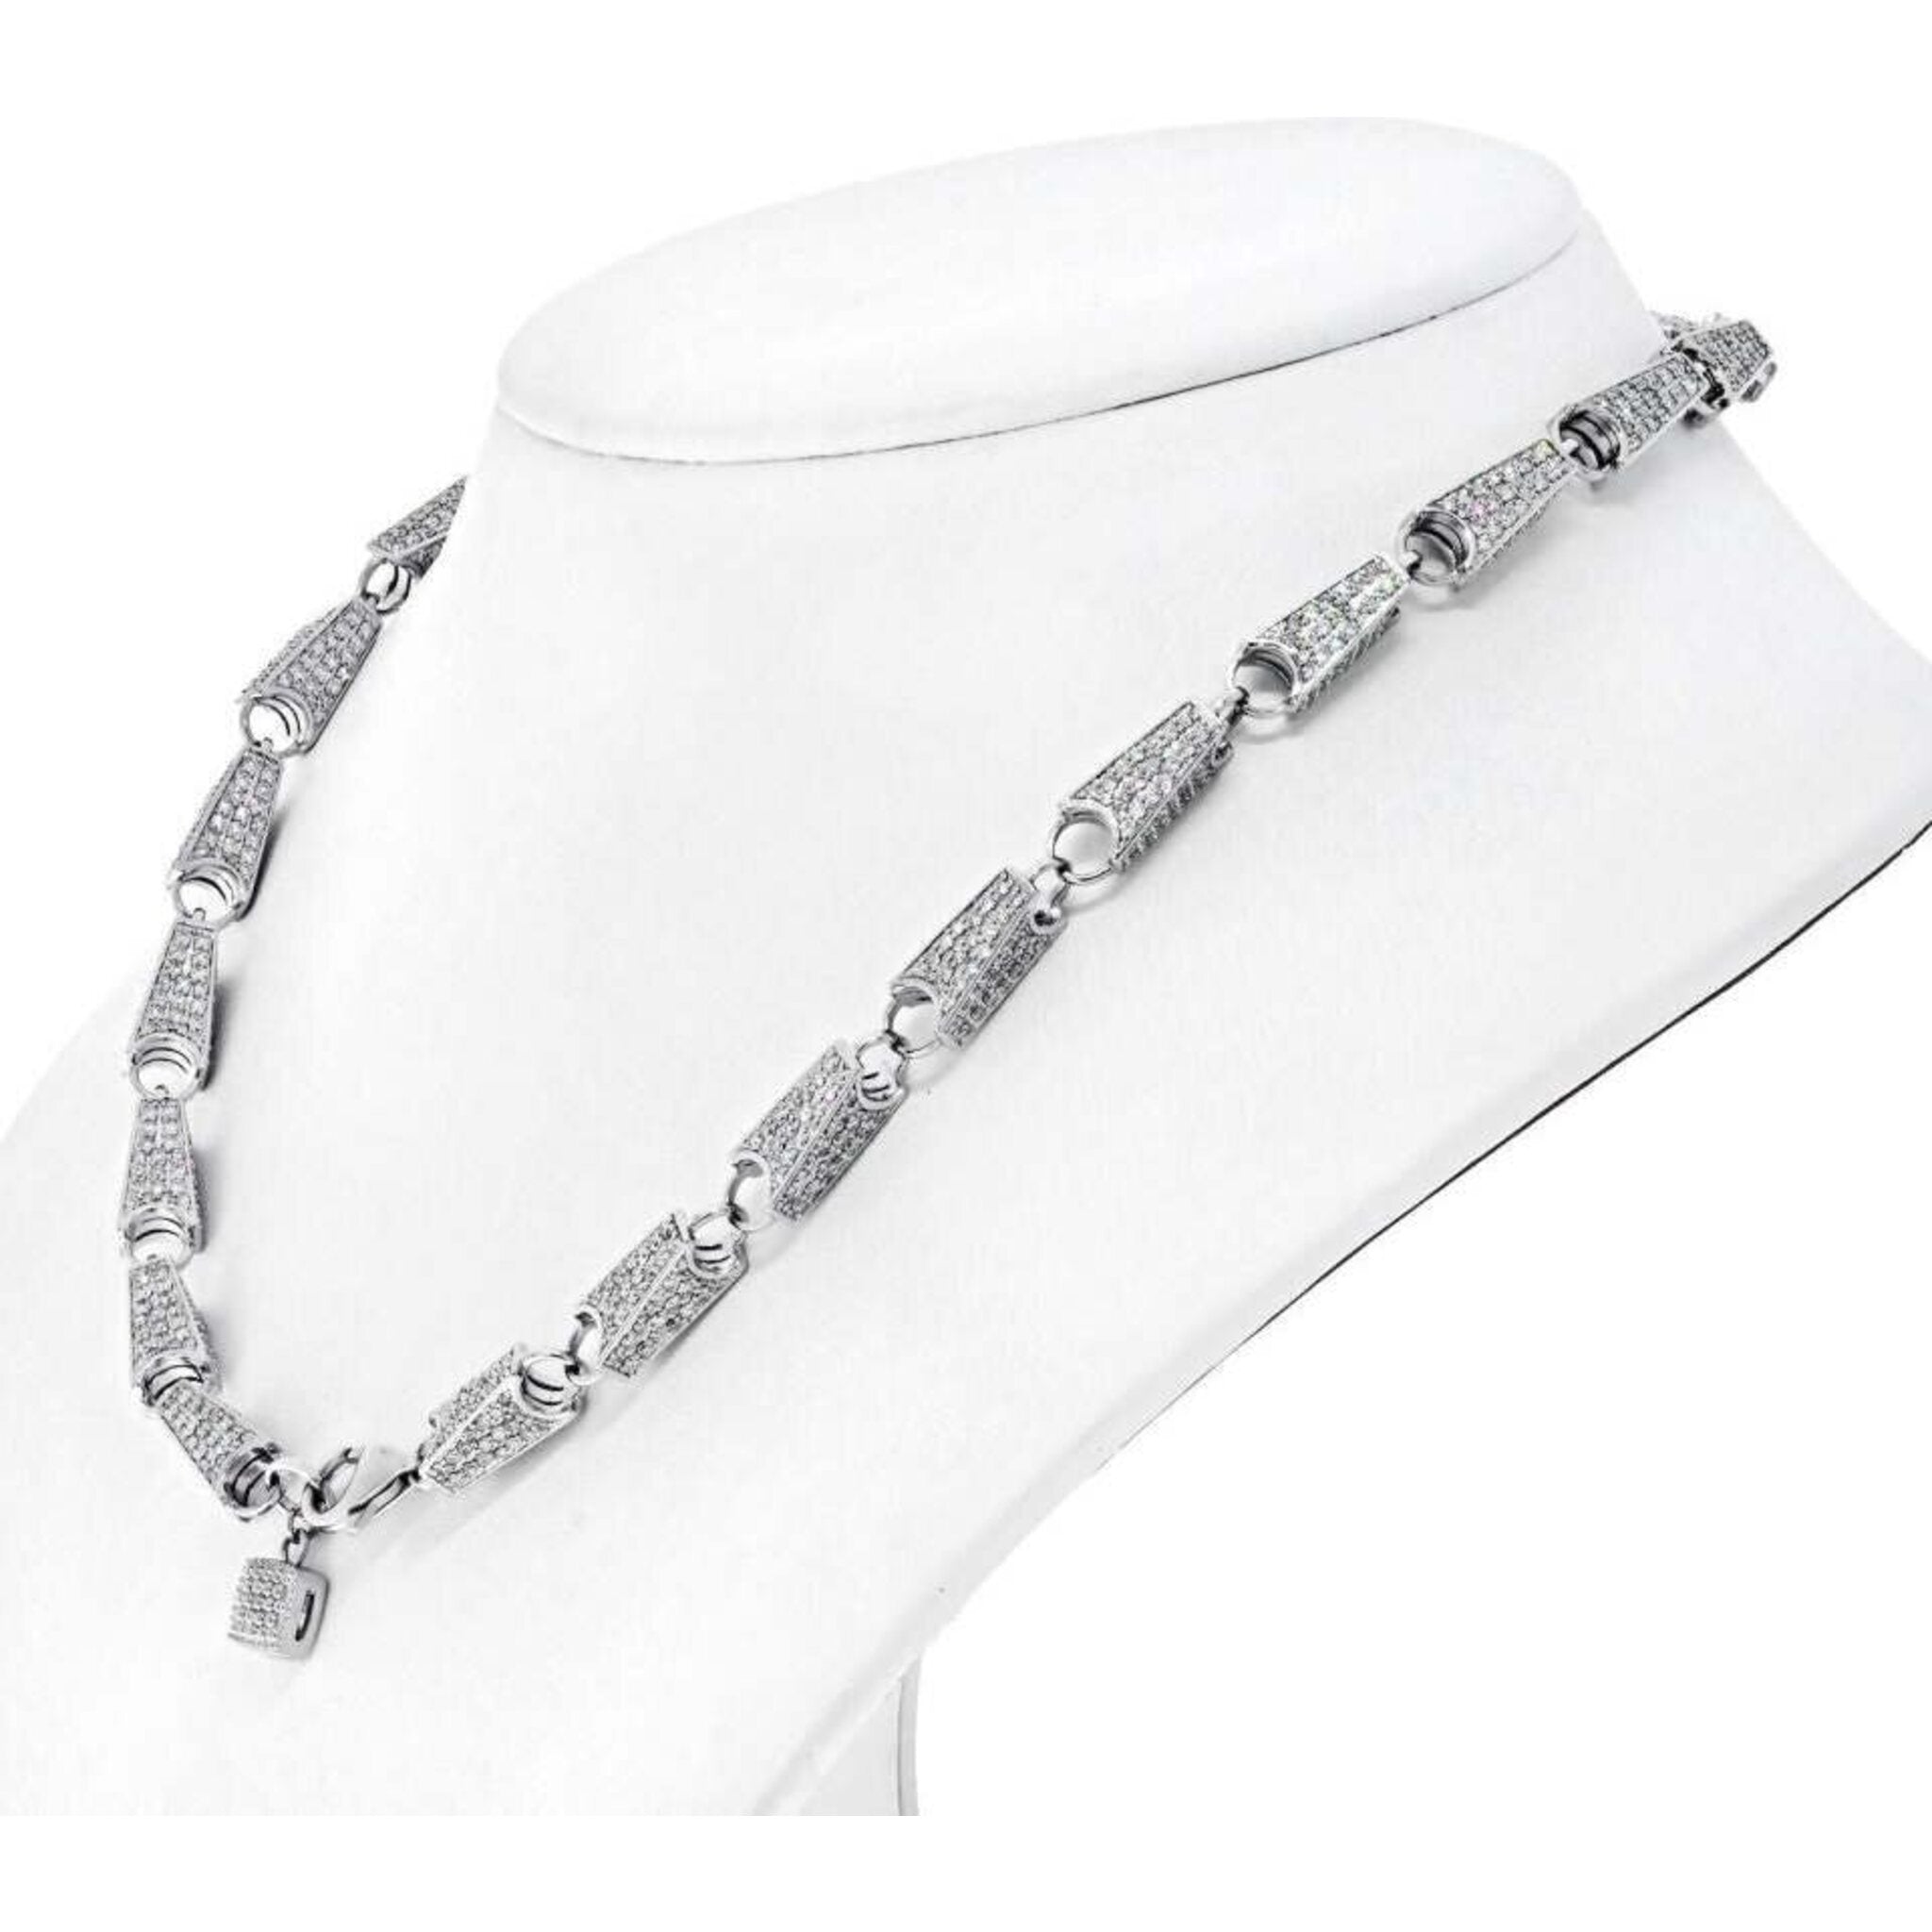 14K White Gold 15.68 Carat Diamond Link Chain Necklace